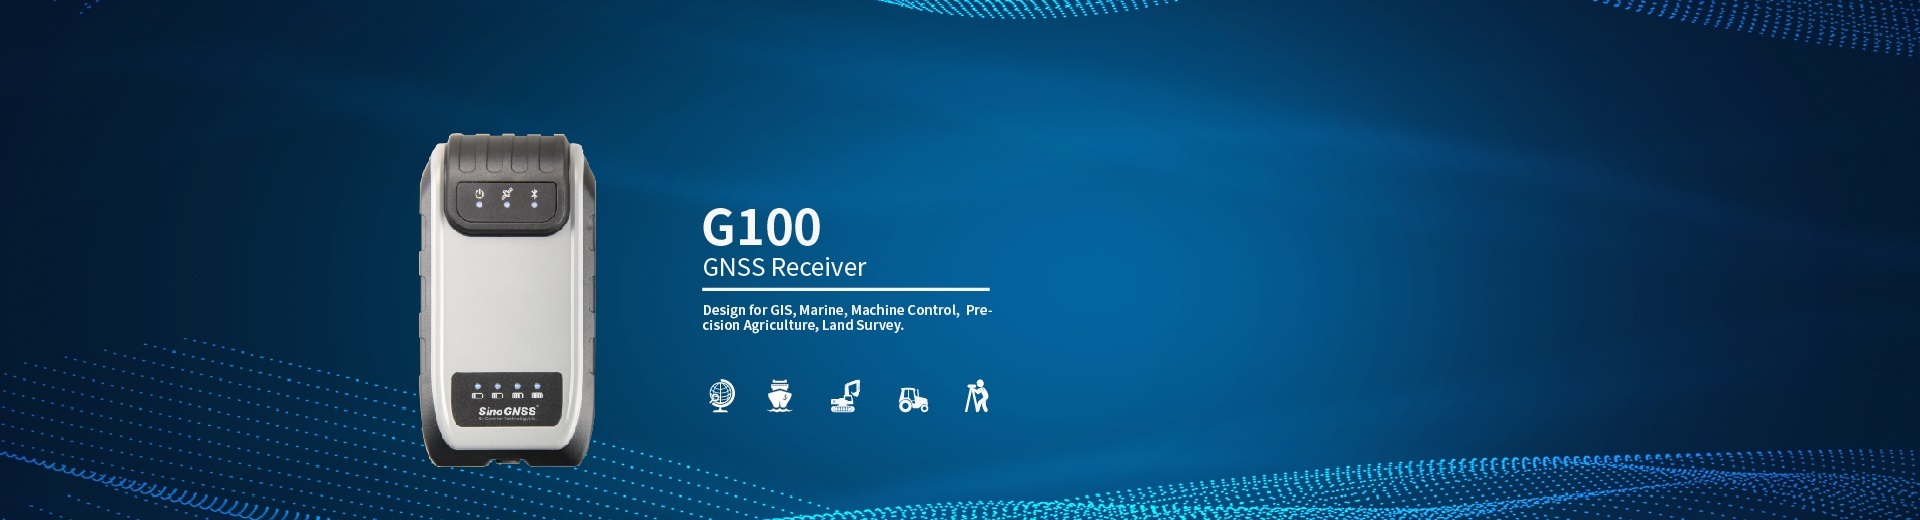 G100 GNSS Receiver